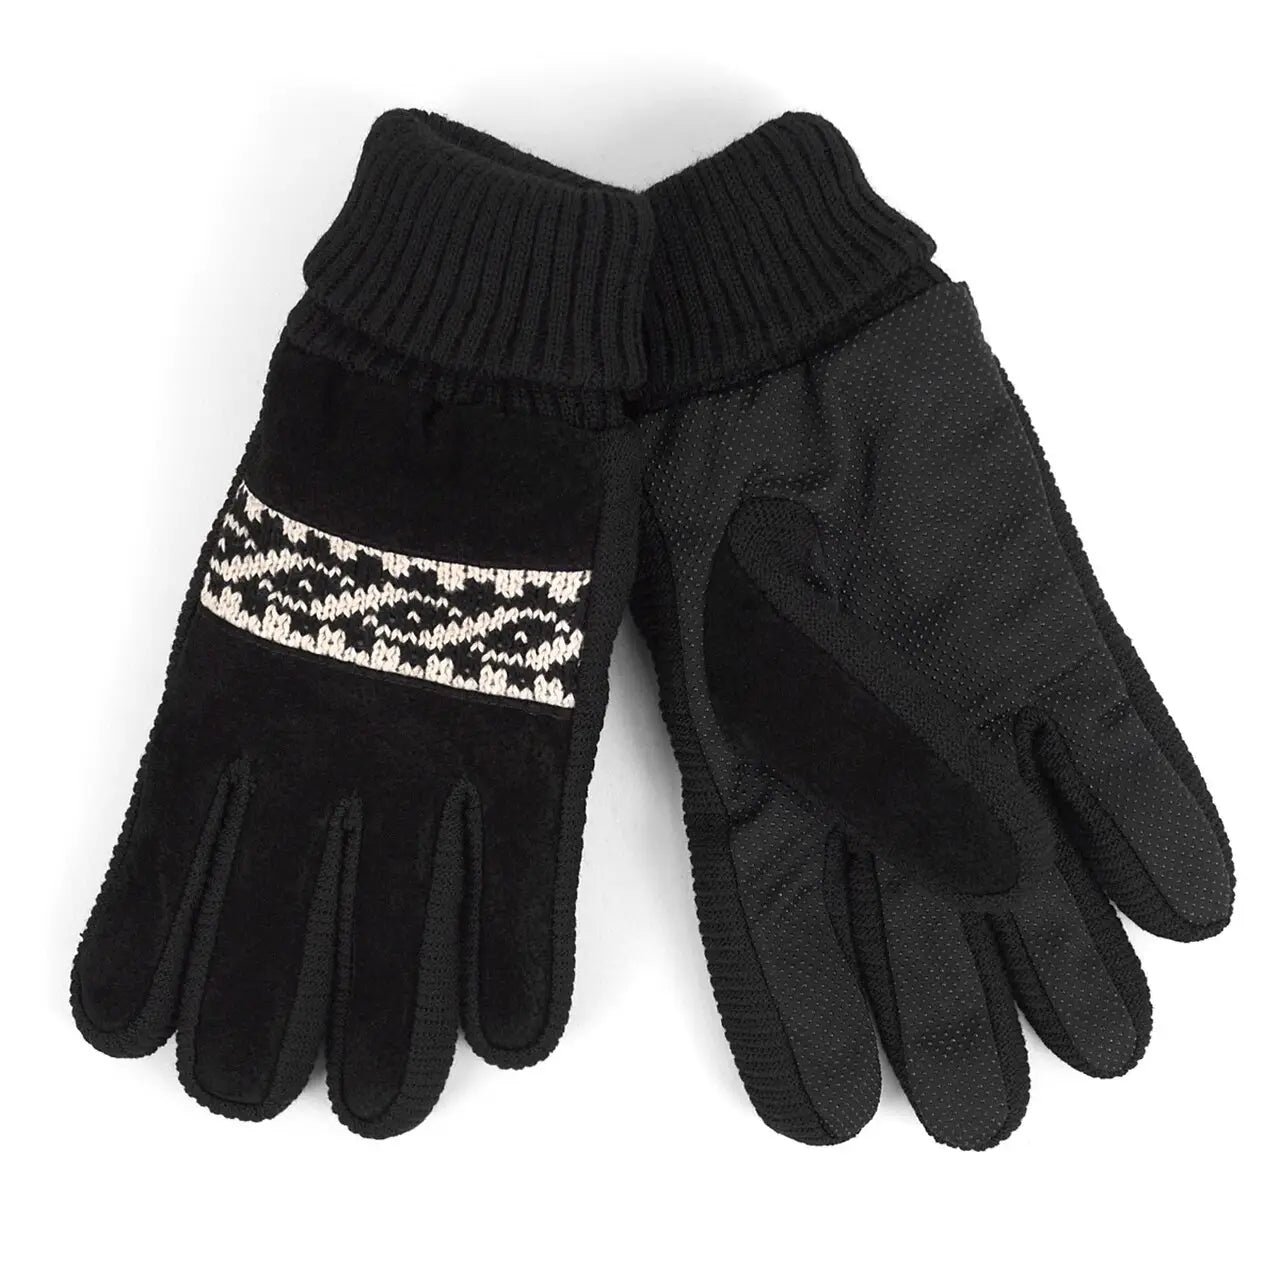 Men's Genuine Leather Non Slip Grip Winter Gloves